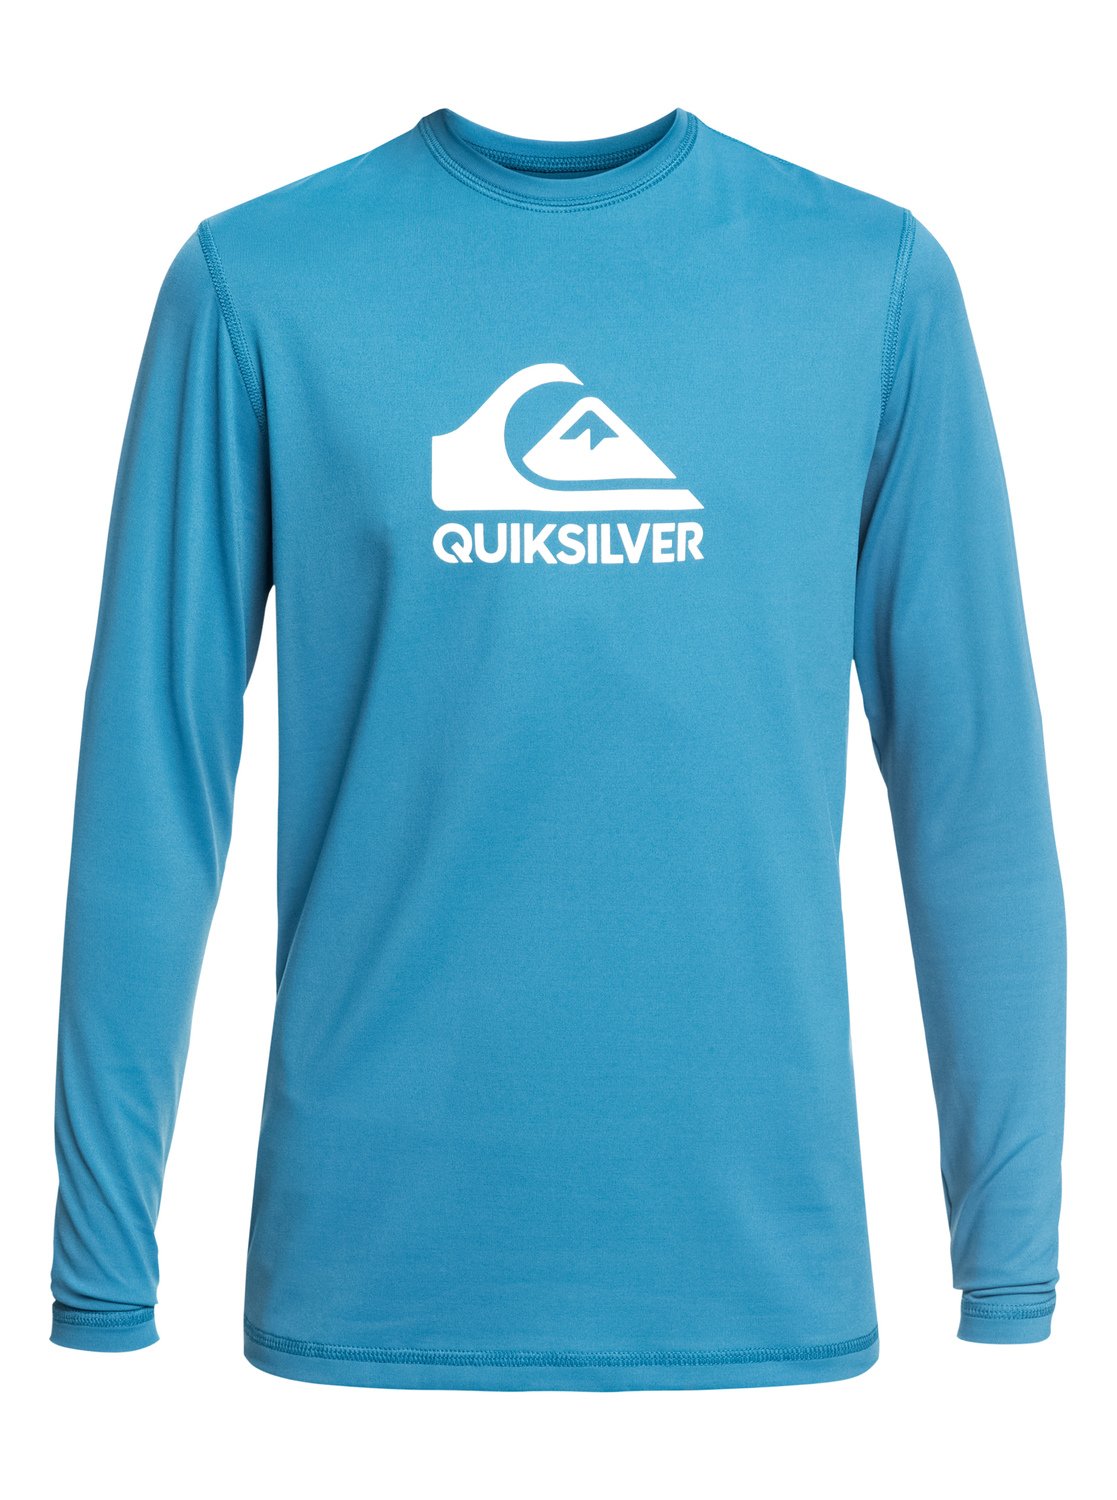 Quiksilver Solid Streak LS Surf Tee BPB0-SouthernOcean L/14